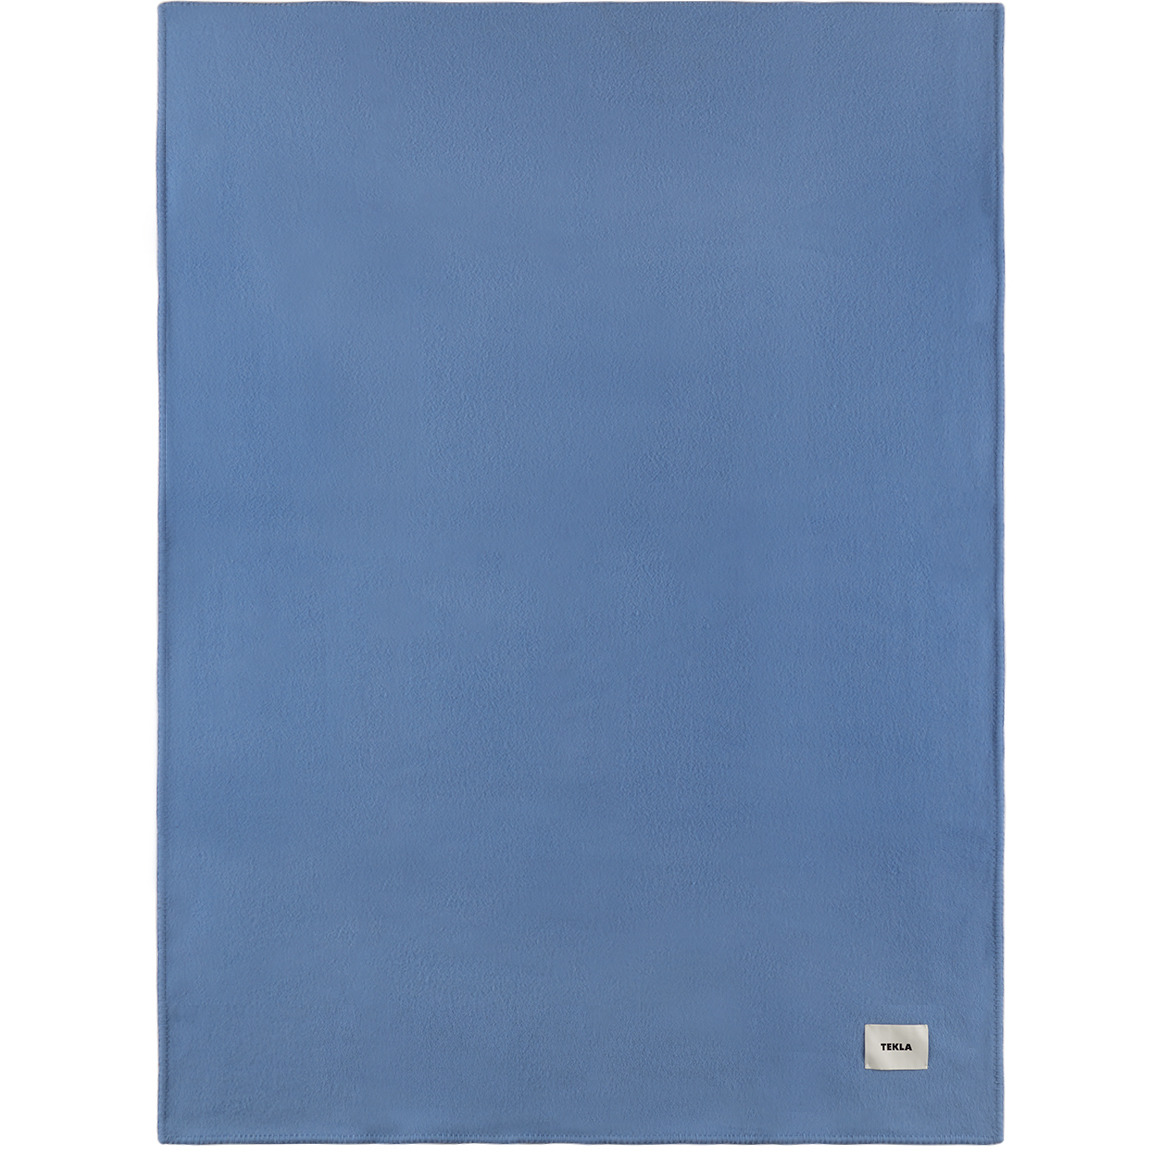 Tekla Blue Pure Wool Blanket - image 1